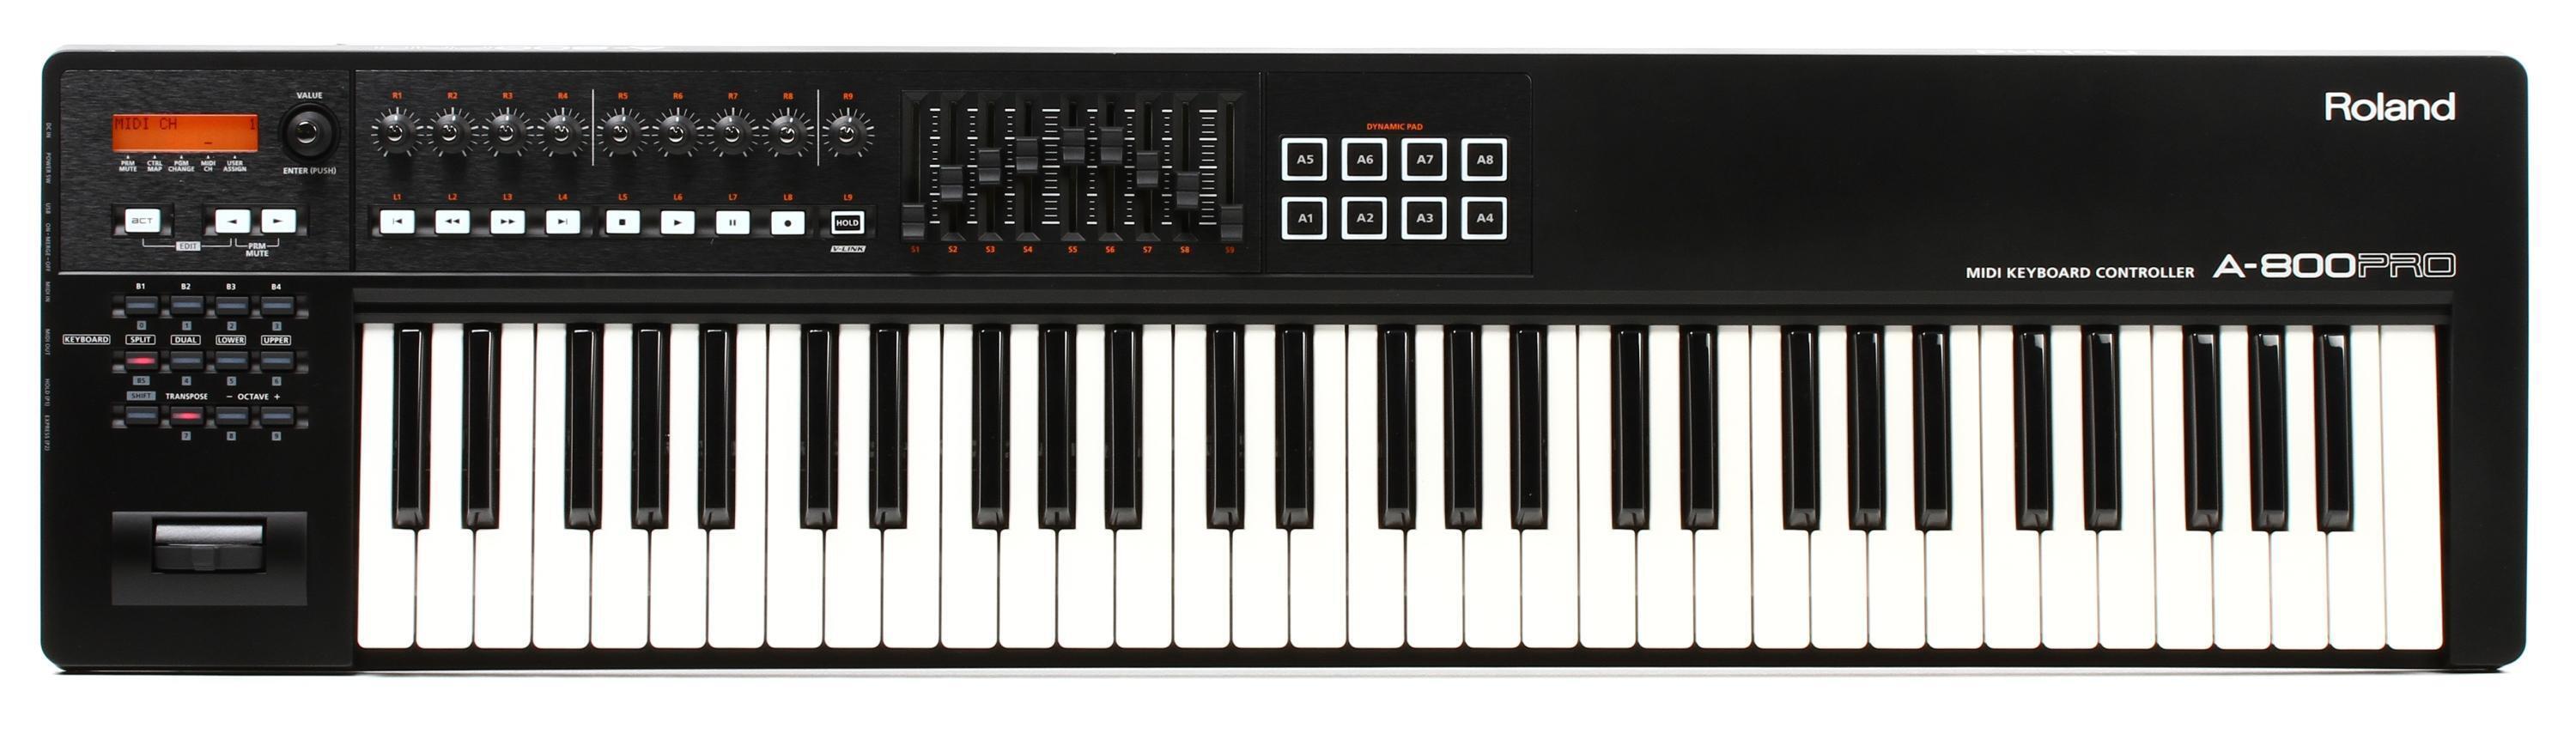 Roland A-800 PRO 61-key Keyboard Controller